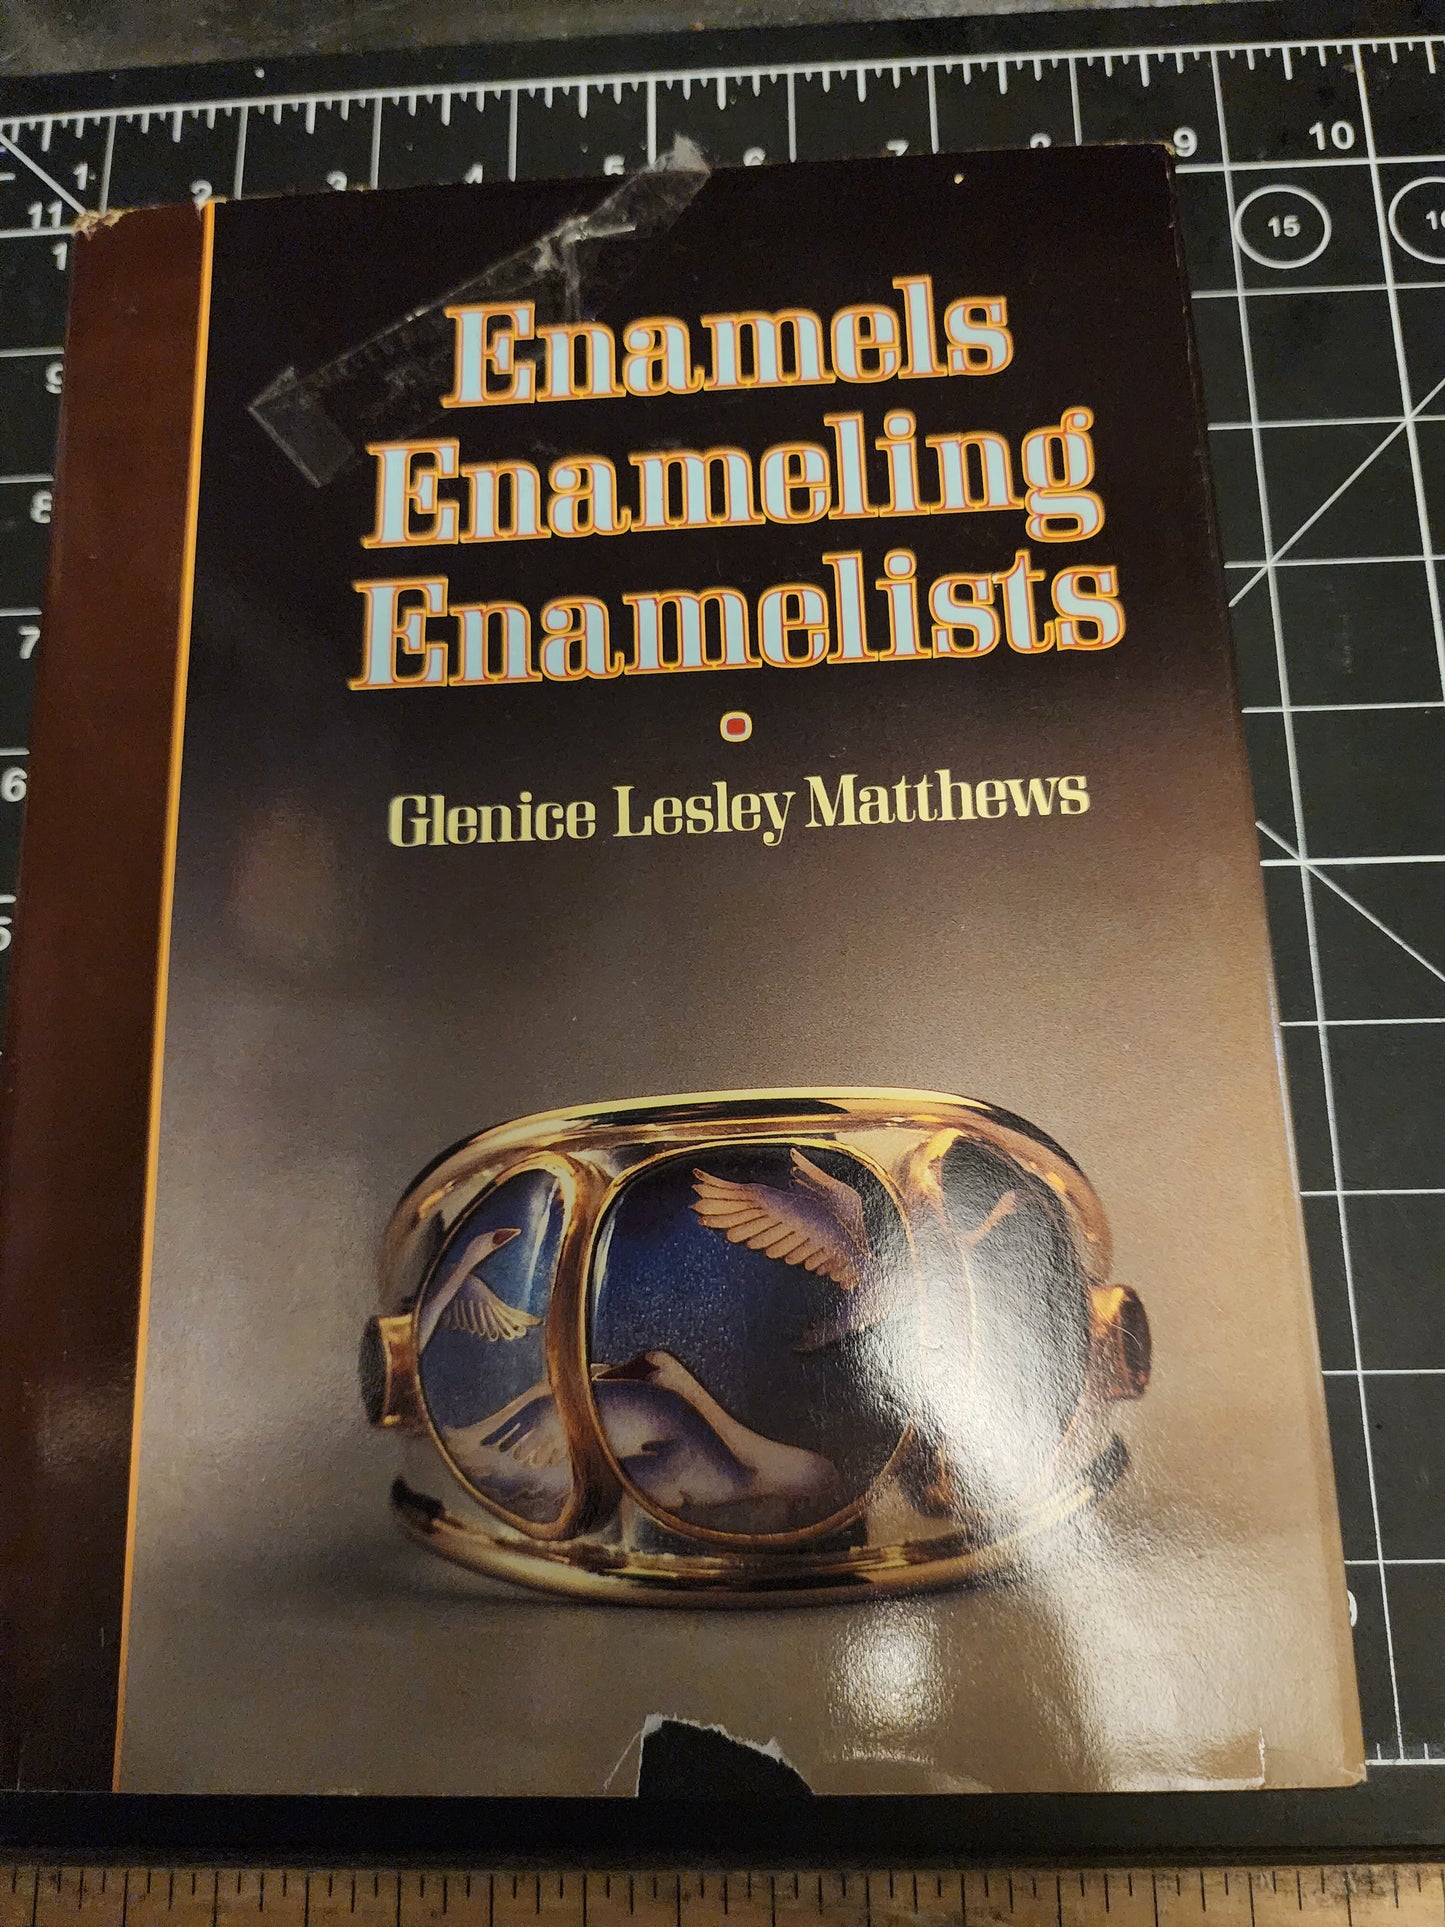 The Emporium Book Shelf  - Enamels, Enamelling, Enamelists by by Glenice L. Matthews